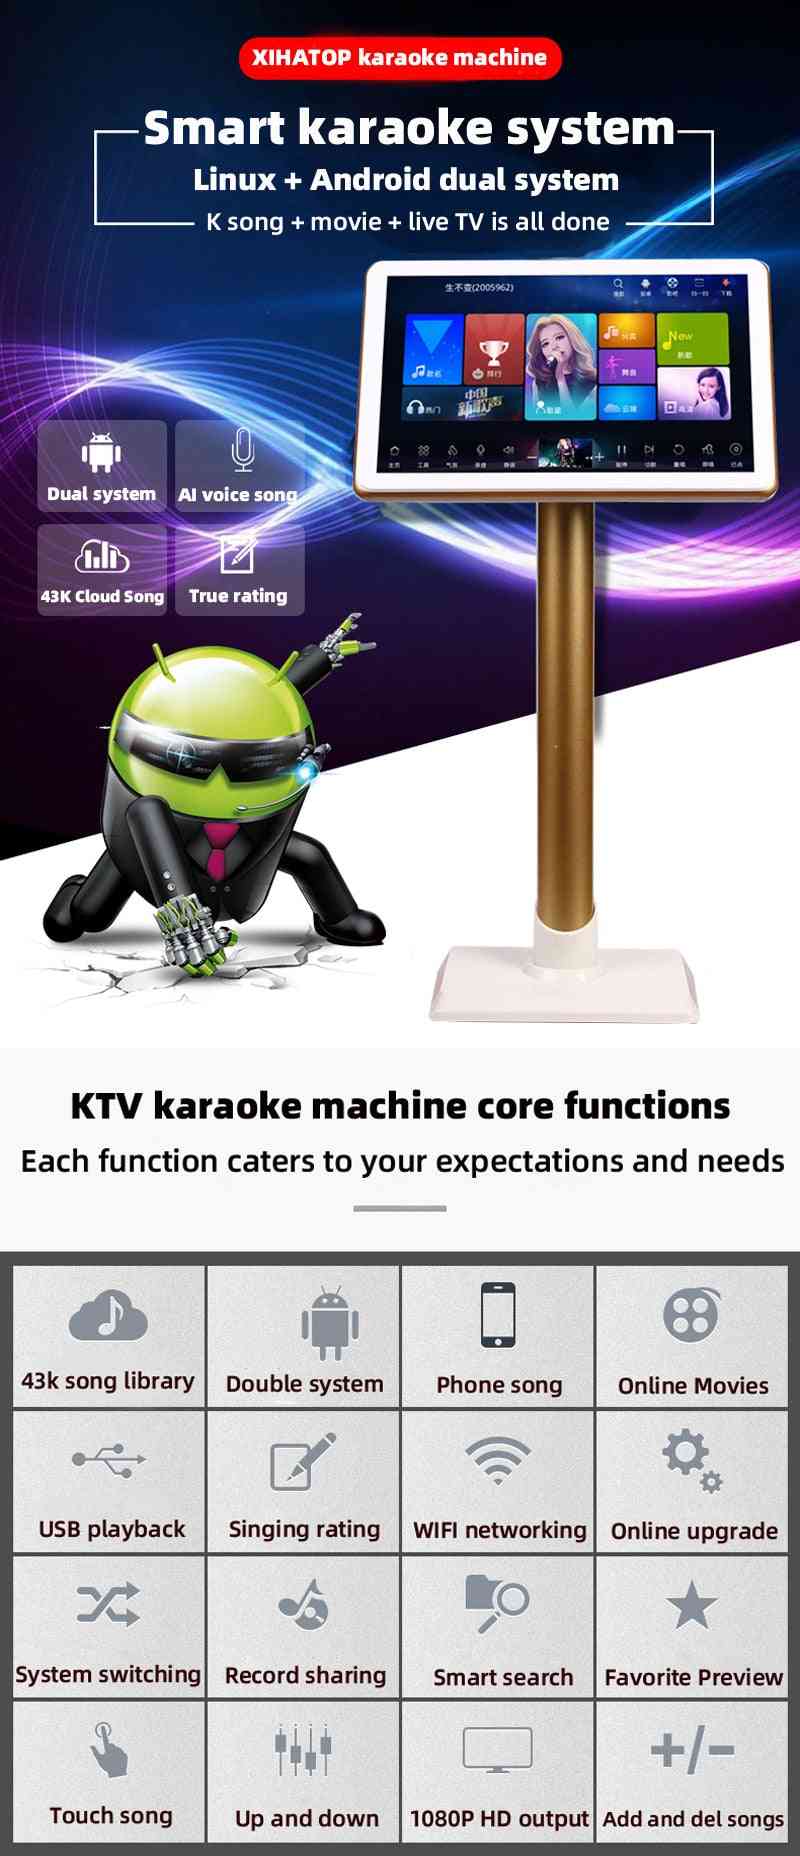 , home ktv chanter karaoké -player machine android avec 3tb hdd 60k chansons, avec écran tactile -